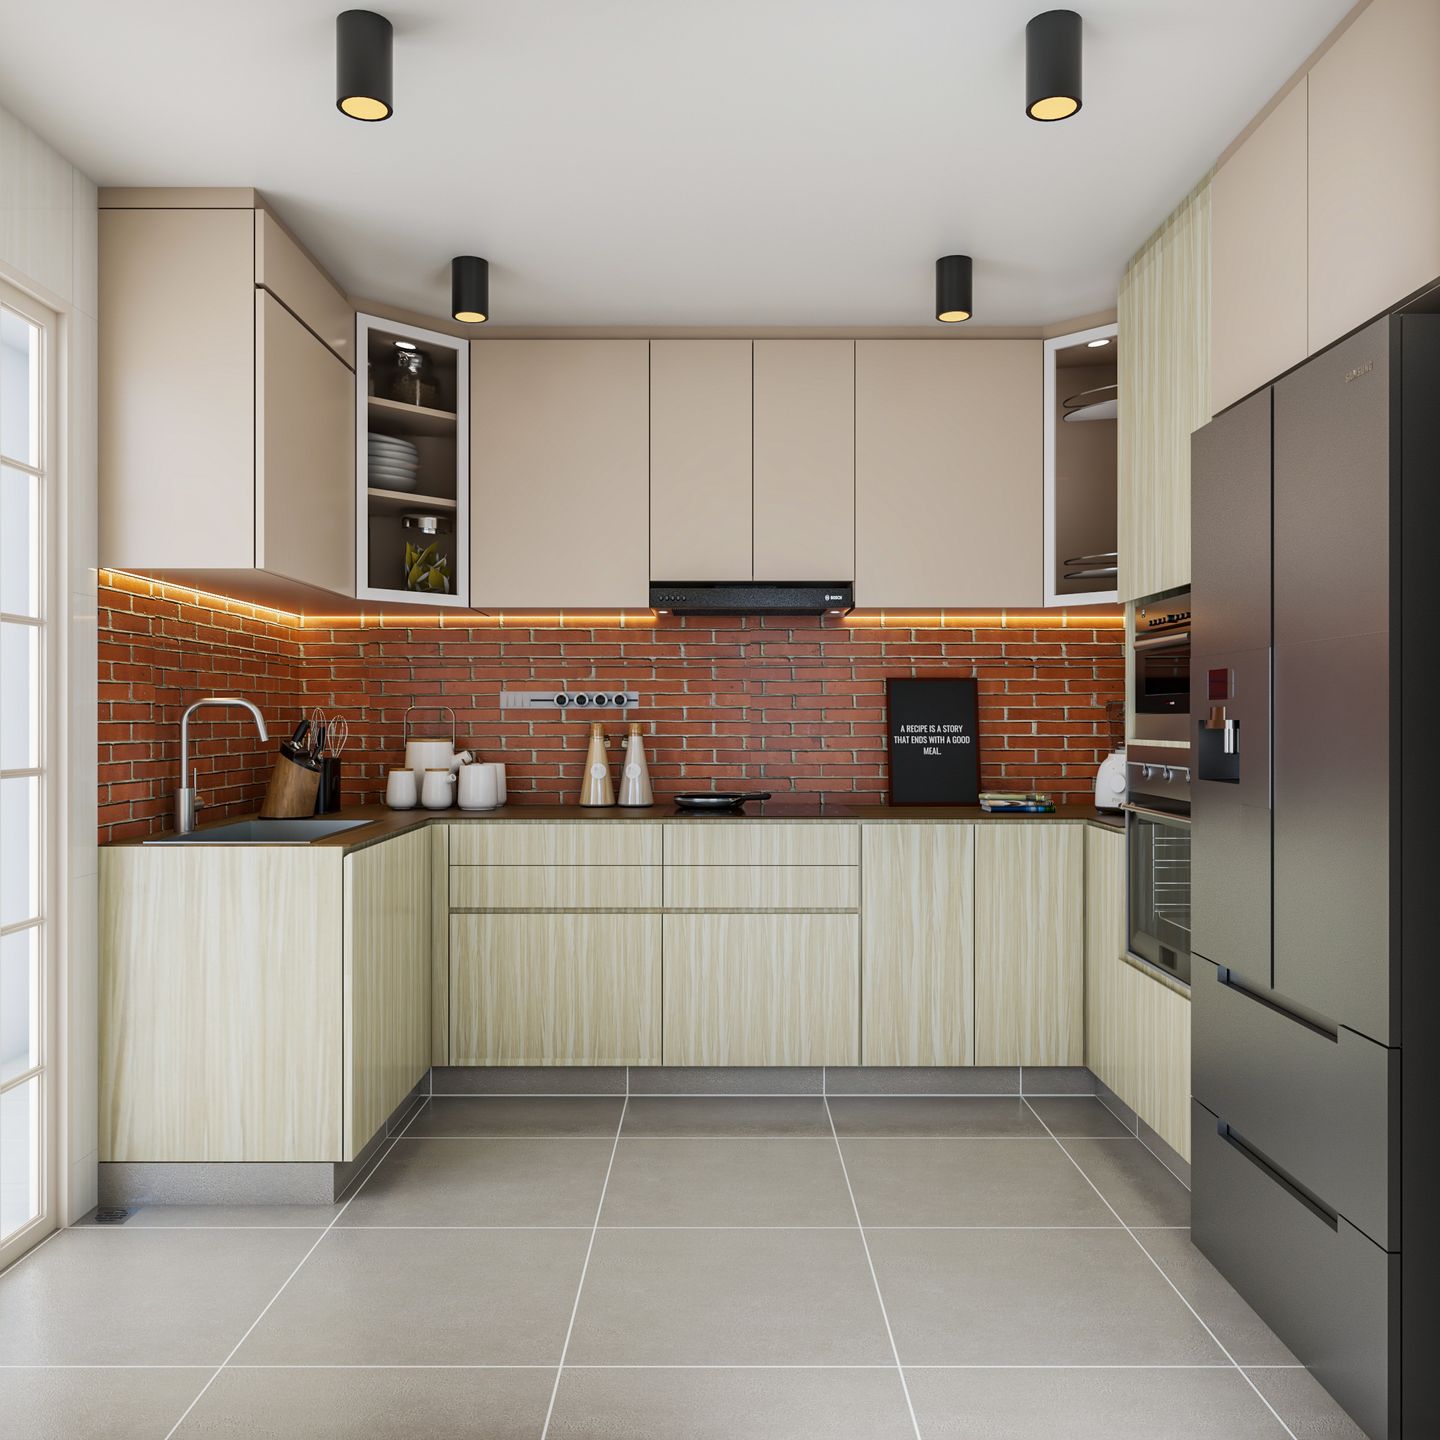 Contemporary Kitchen Design With Brick Dado Tiles - Livspace